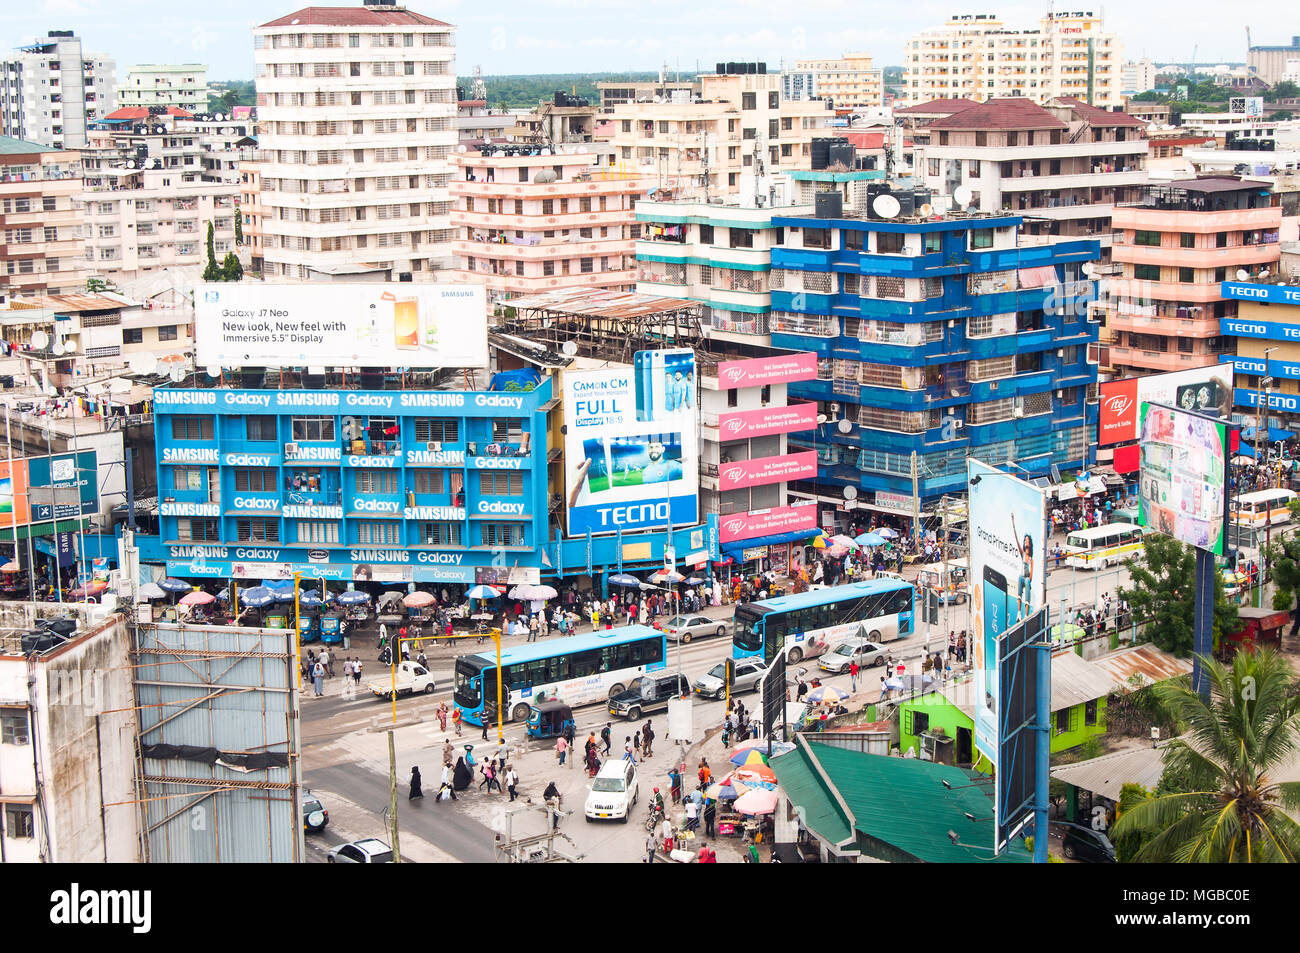 Vista aérea de la calle y la calle Msimbazi Uhuru, Kariakoo, mirando al sudeste, Dar es Salaam, Tanzania Foto de stock